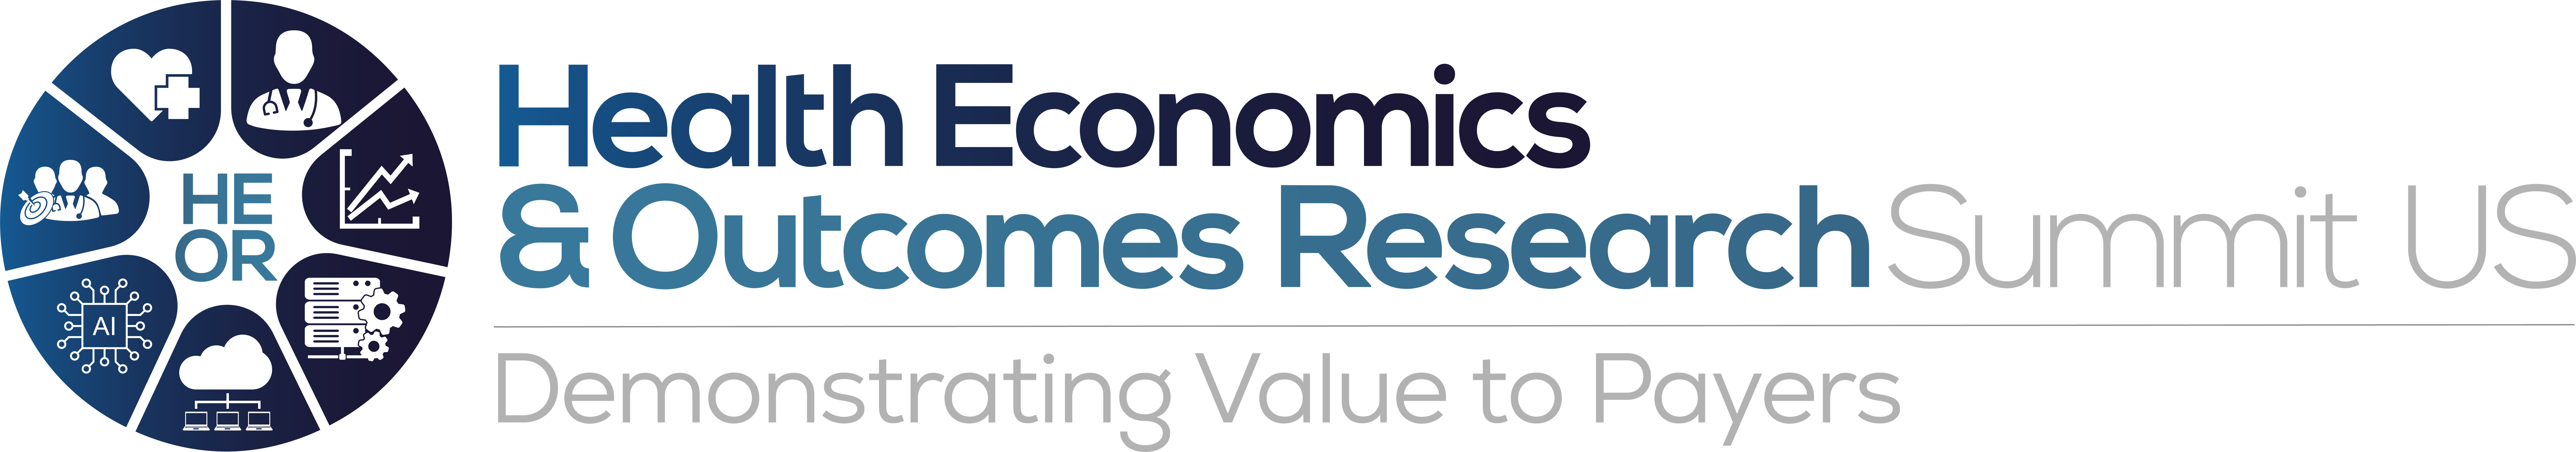 HW230629 33264 – Heath Economics & Outcomes Research Summit US logo FINAL